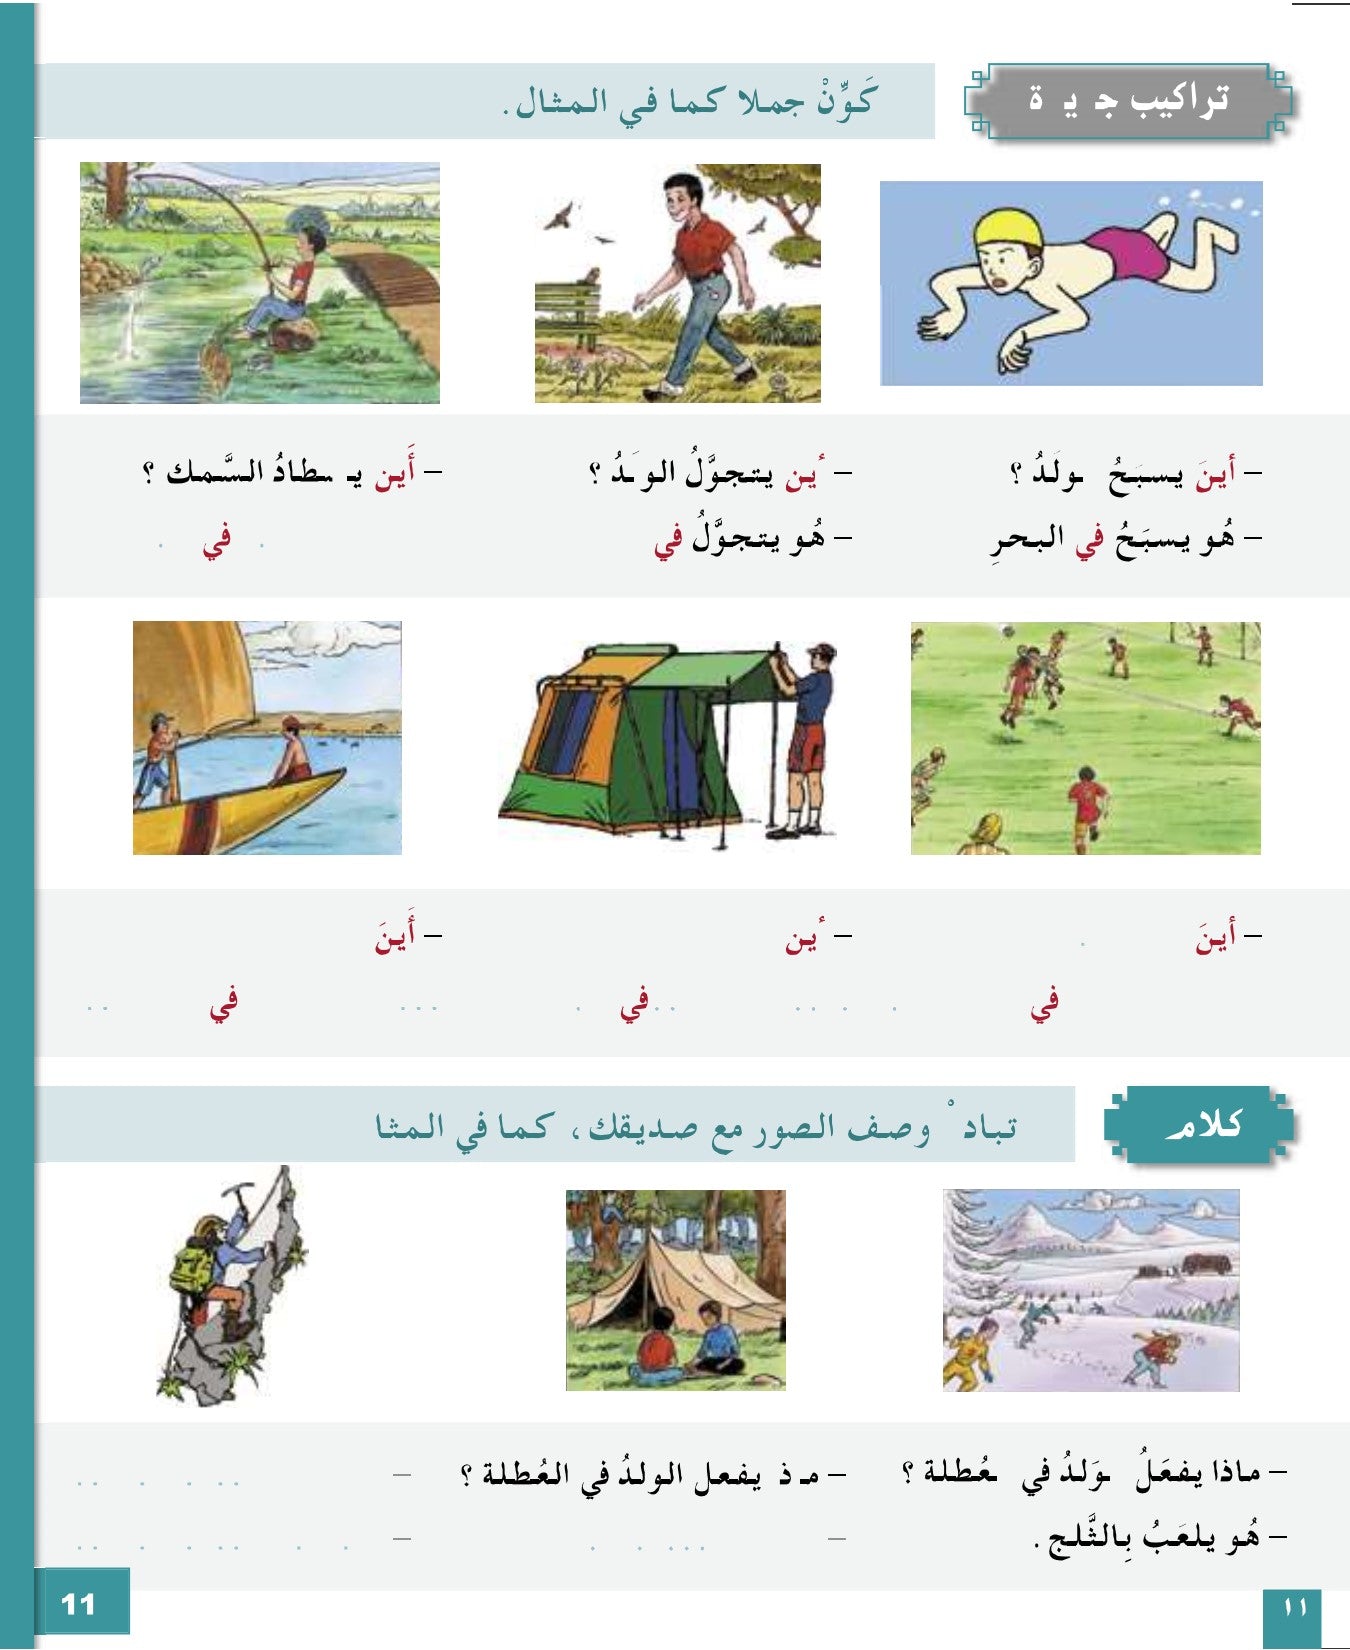 I Love and Learn Arabic (أحب و أتعلم العربية) - Level 4 - Textbook